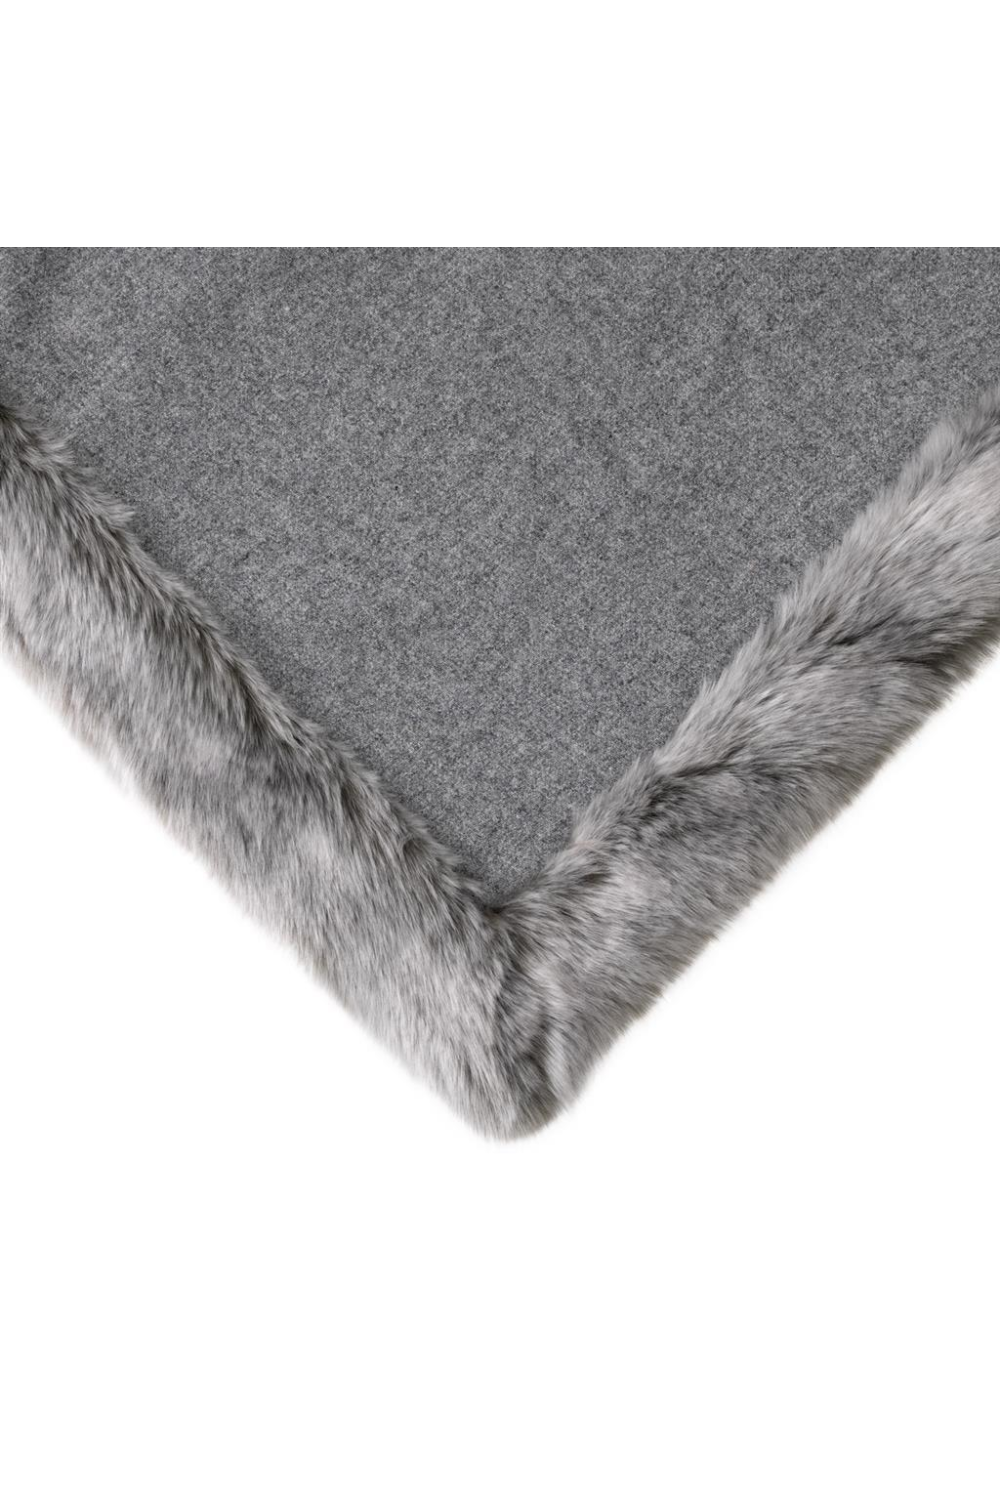 Soft Textured Gray Faux Fur Fabric Throw - Eichholtz Alaska | OROA